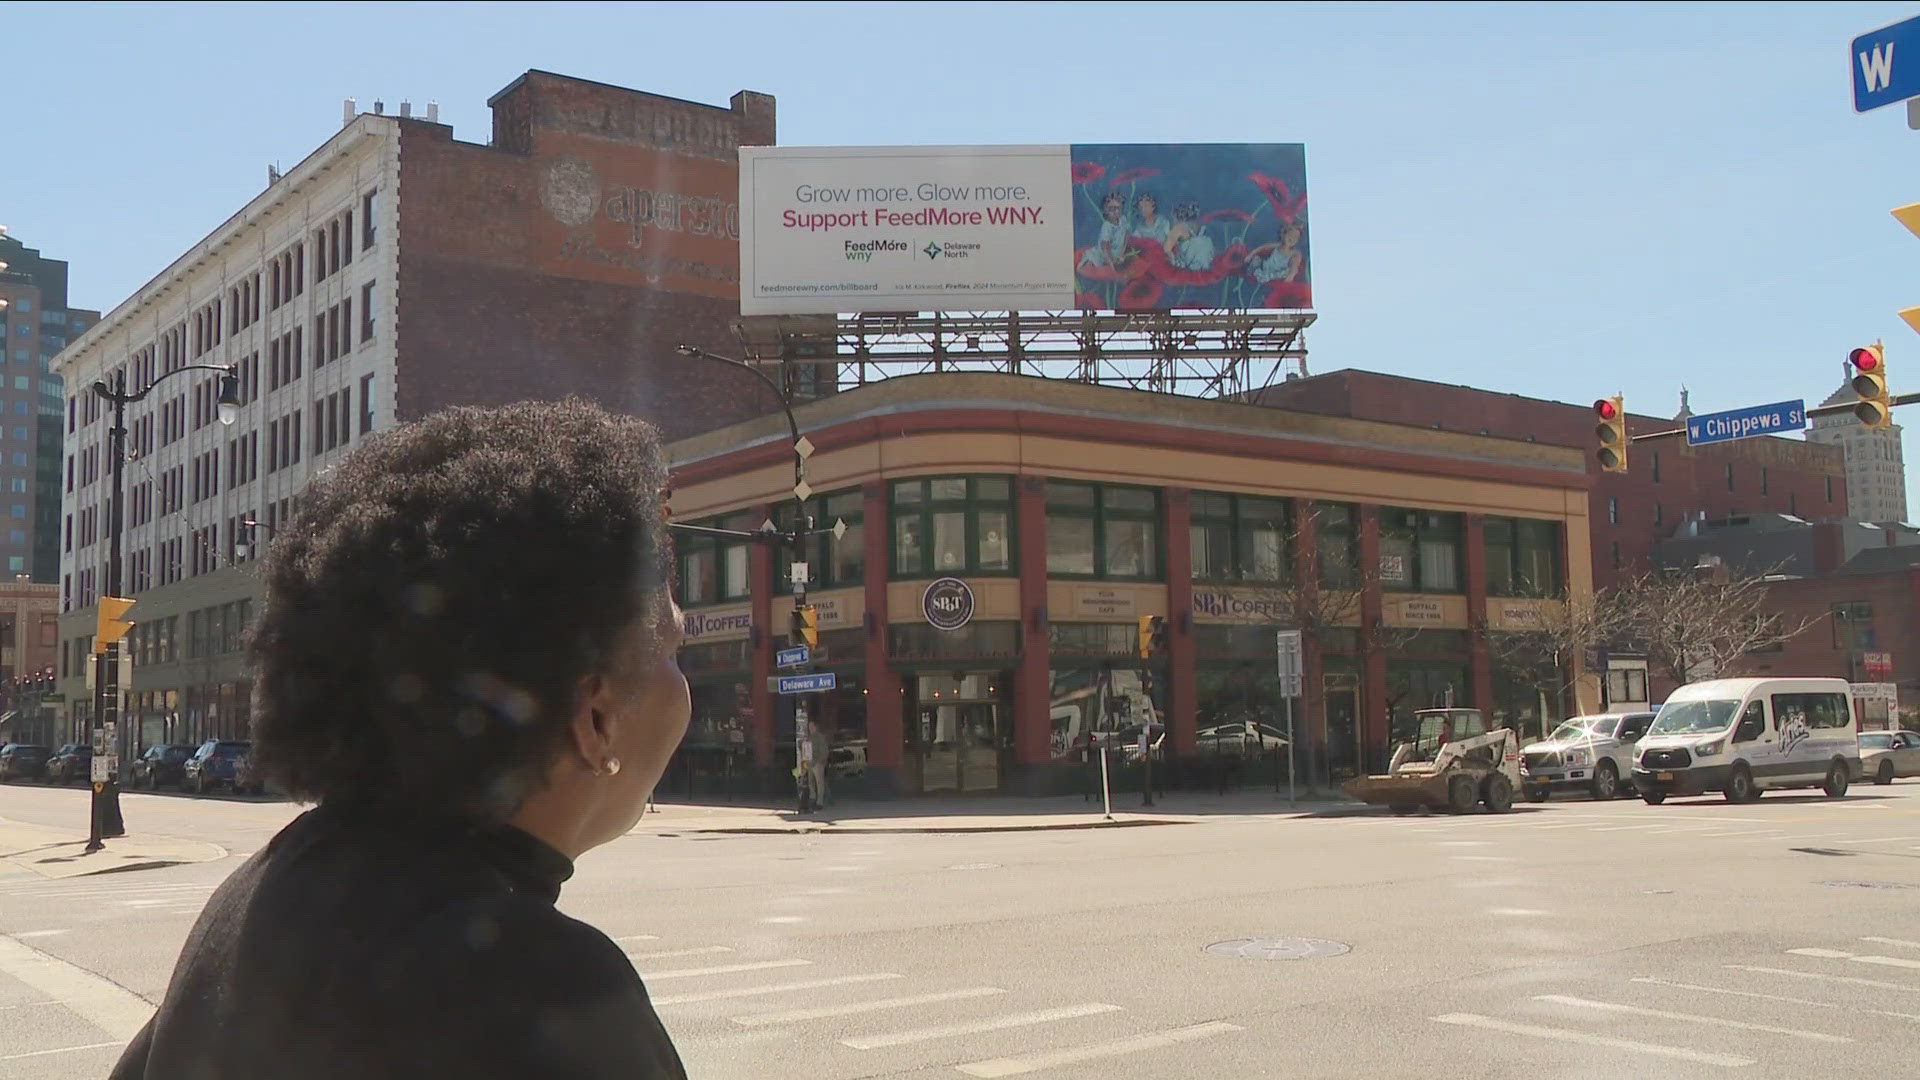 Most Buffalo: 'Billboard artwork highlights FeedMore WNY'